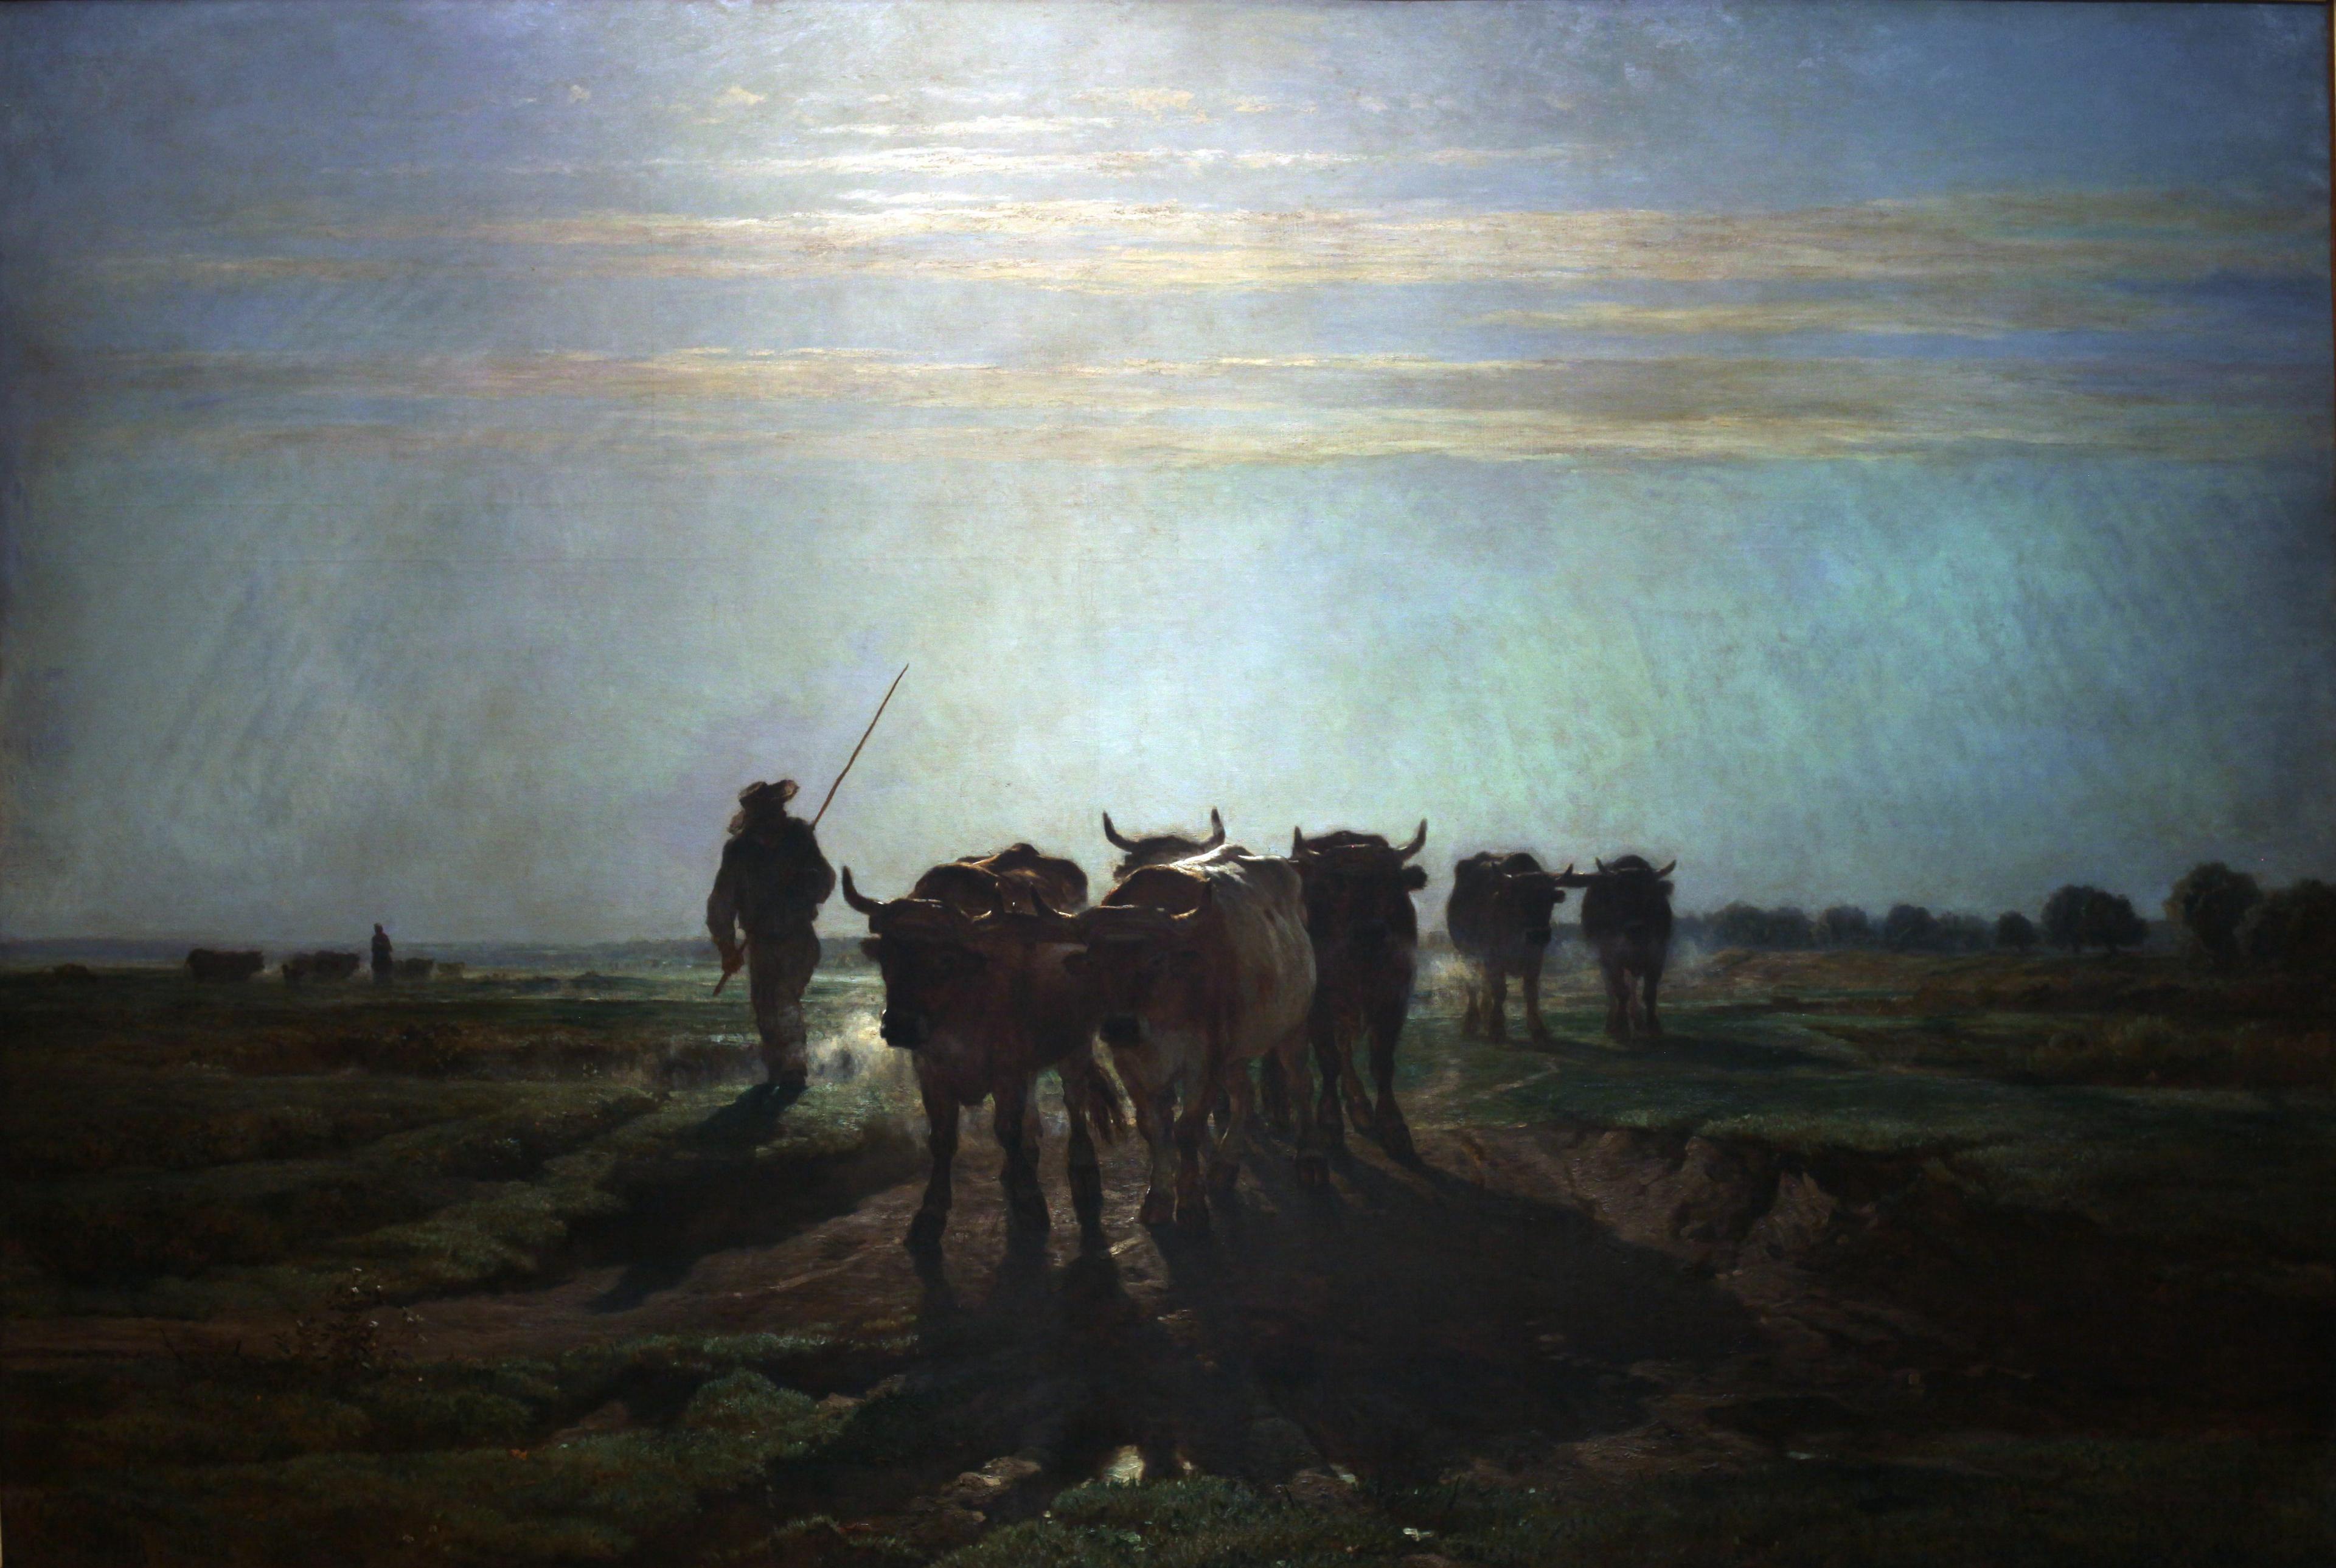 <p><em>Oxen on their way to work </em>by Constant Troyon, Barbizon school, 1855. <em>Courtesy Wikimedia</em></p>